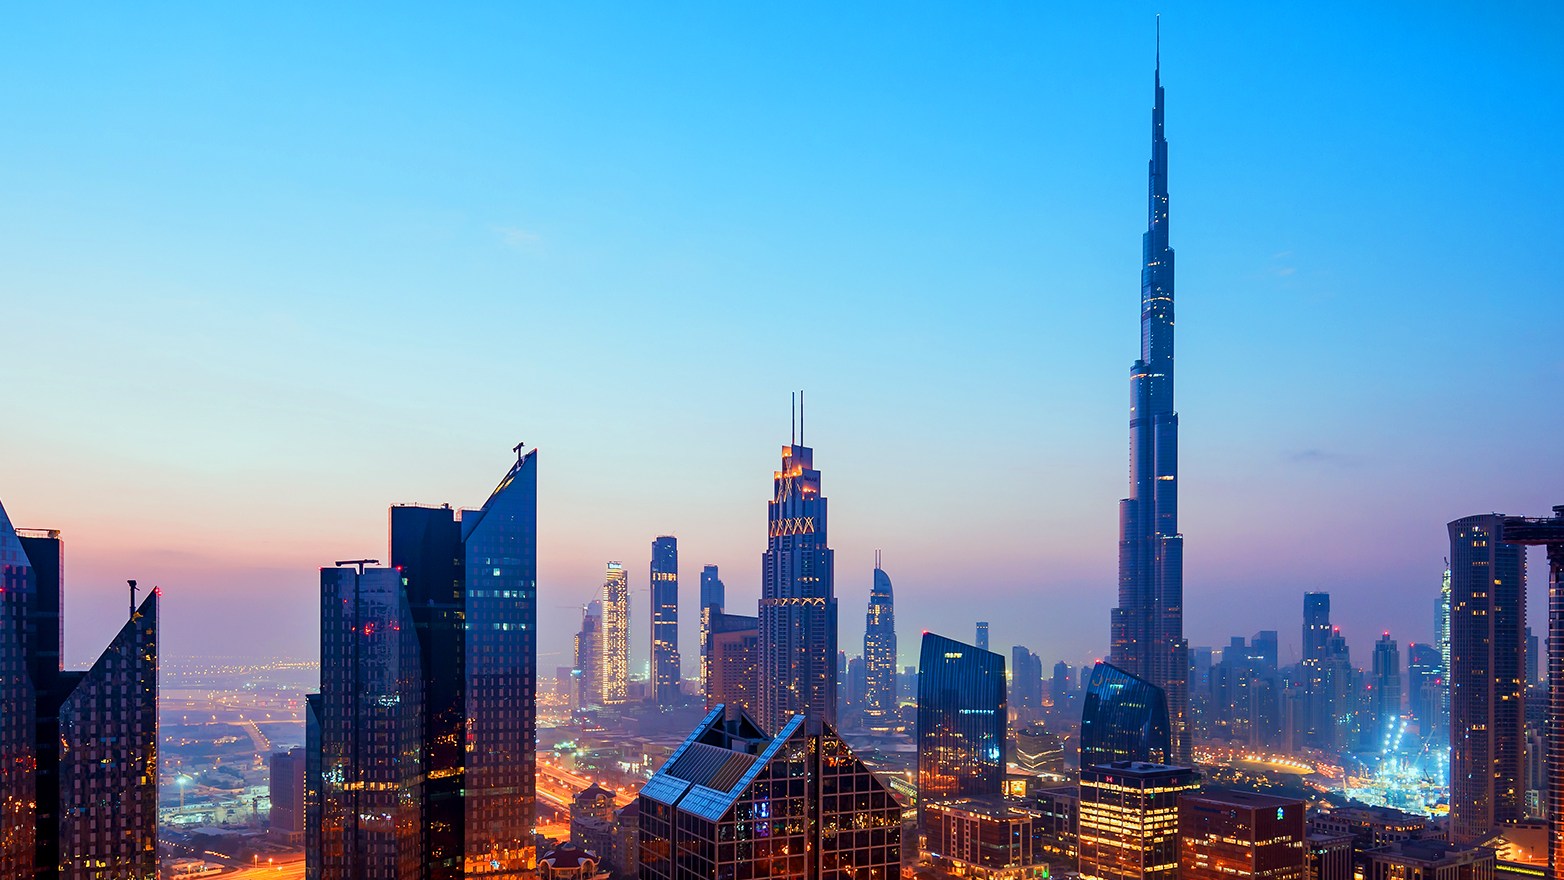 The Dubai skyline with the Burj Khalifa at dawn